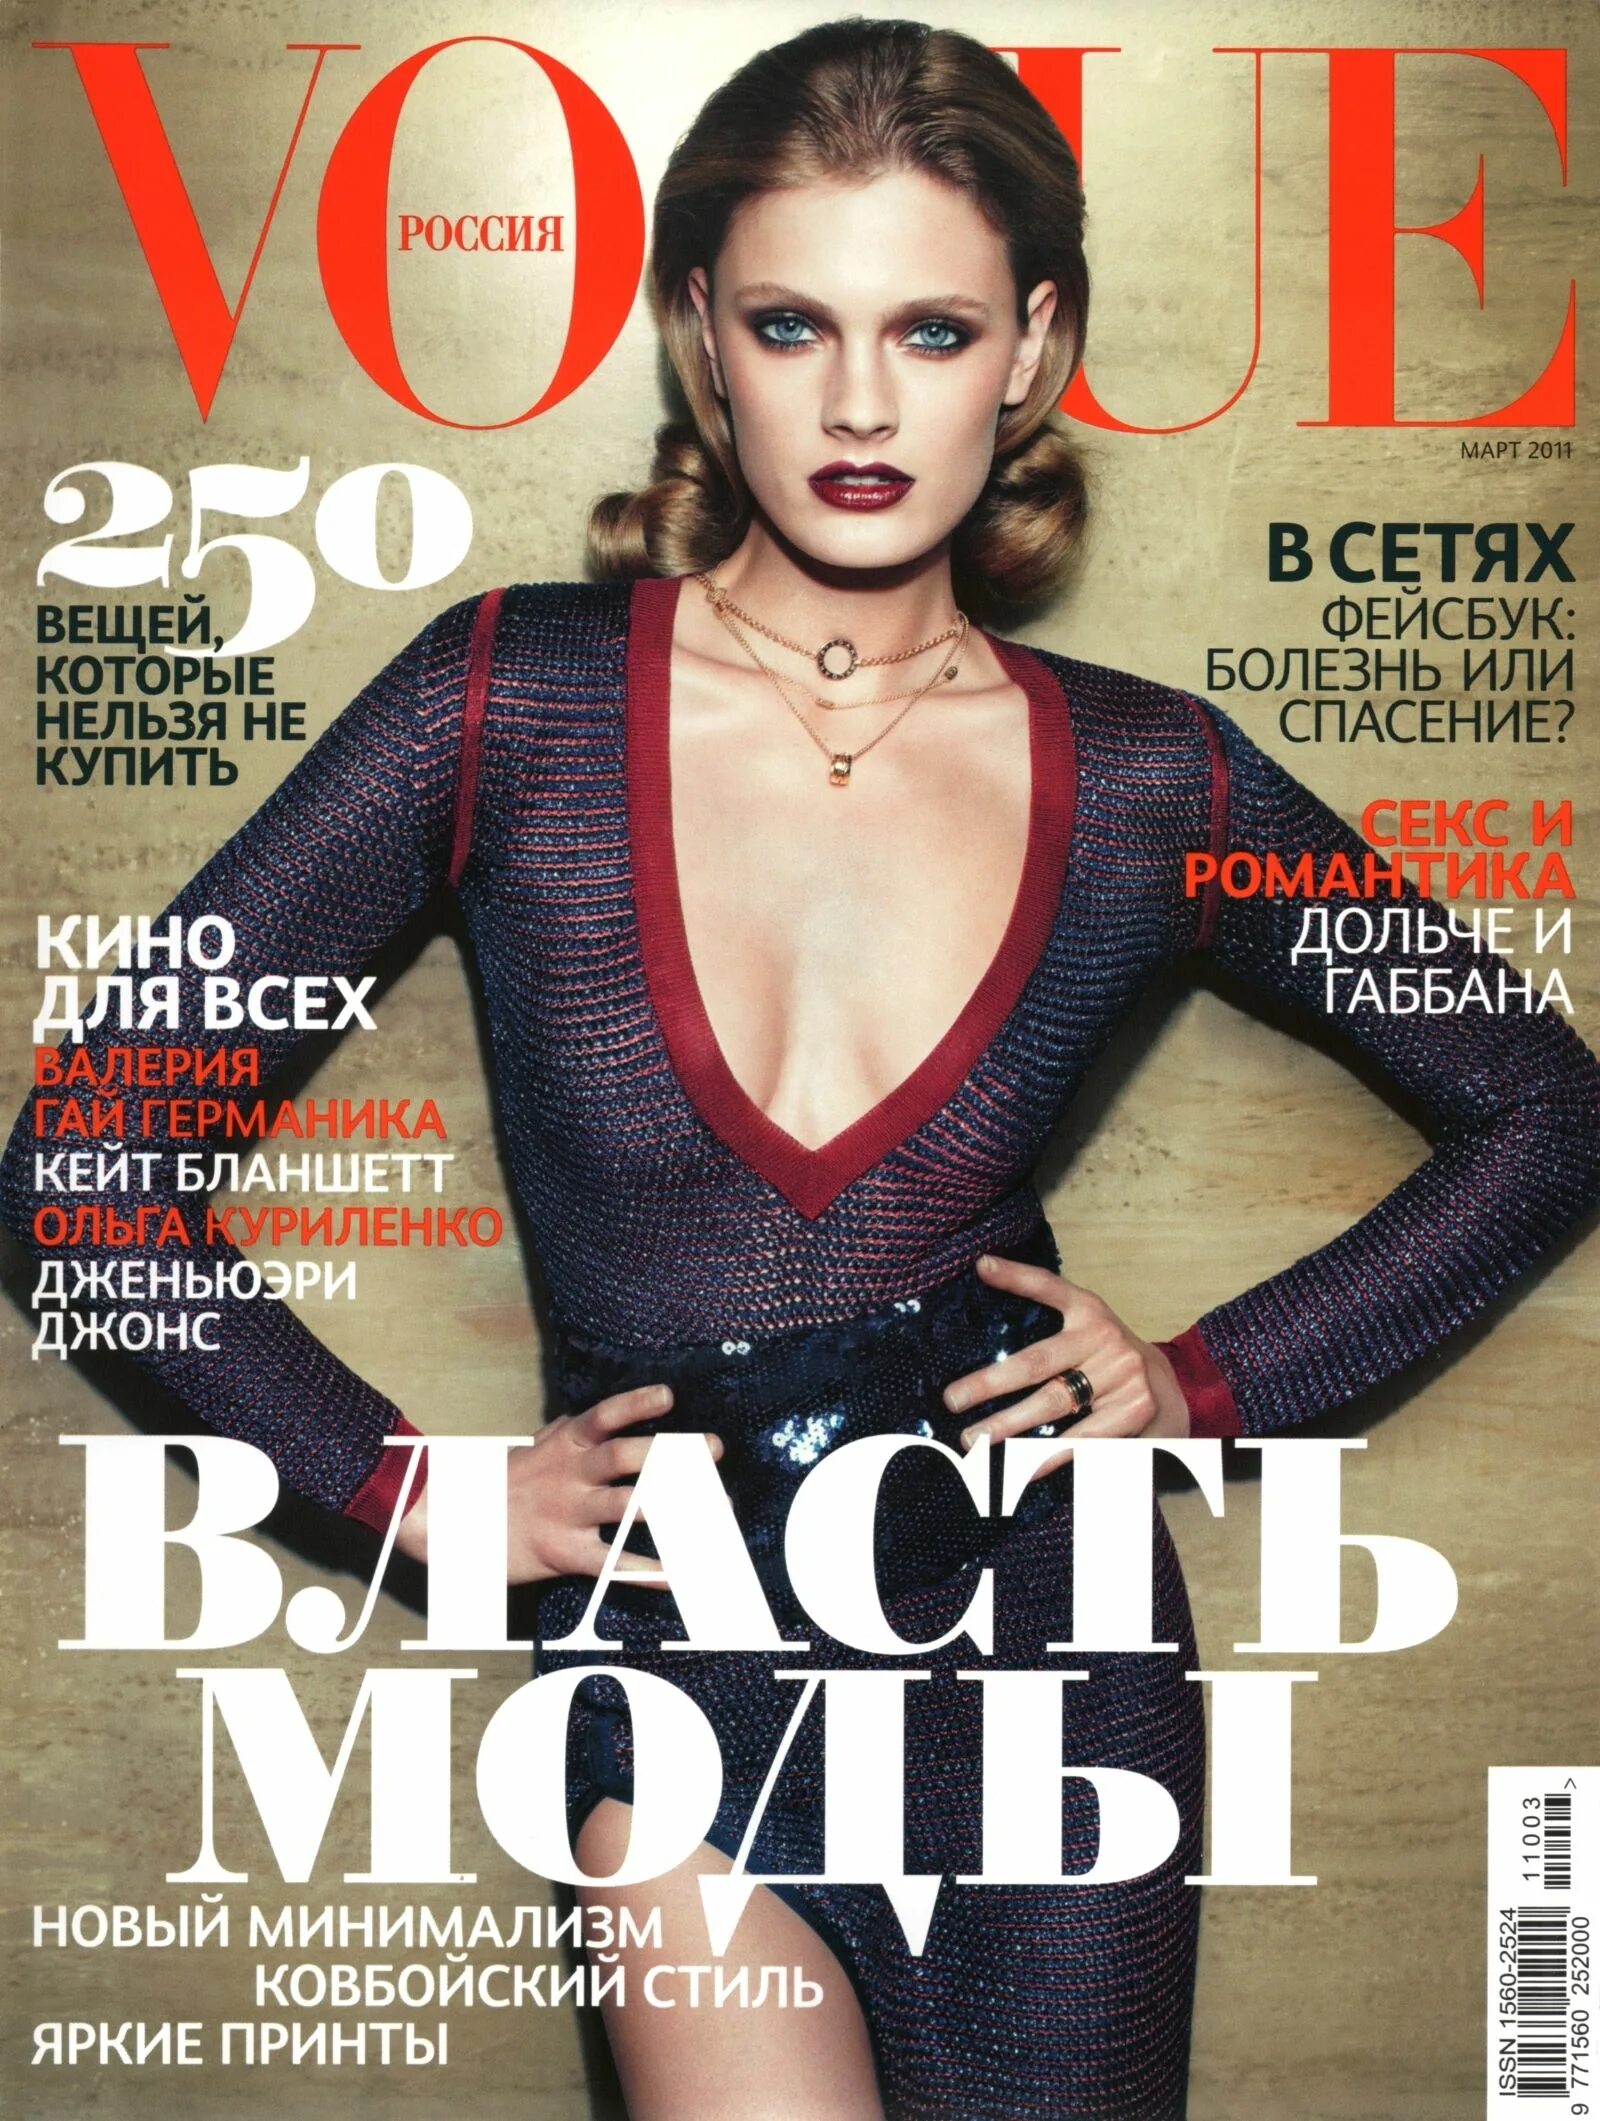 Обложка журнала Vogue. Обложка Вог 2022. Обложка журнала моды Vouge. Глянцевый журнал Вог.